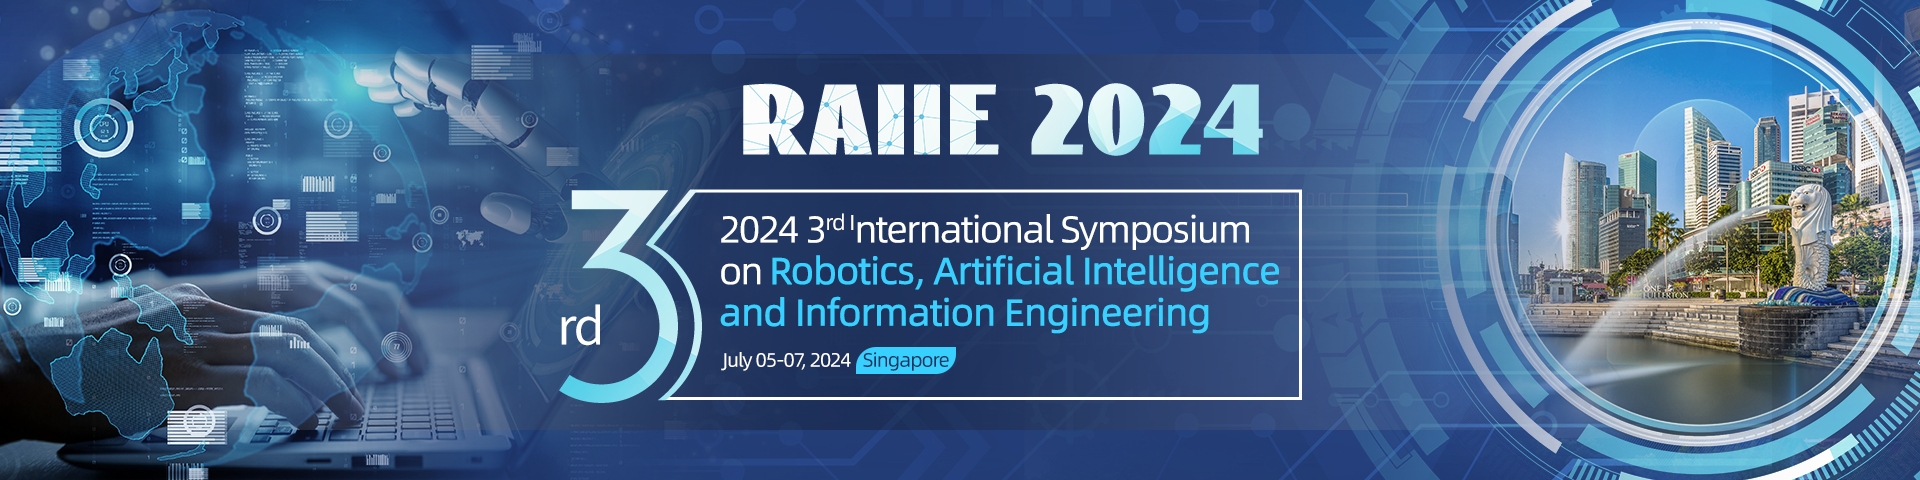 2024 3rd International Symposium on Robotics, Artificial Intelligence and Information Engineering (RAIIE 2024), Singapore